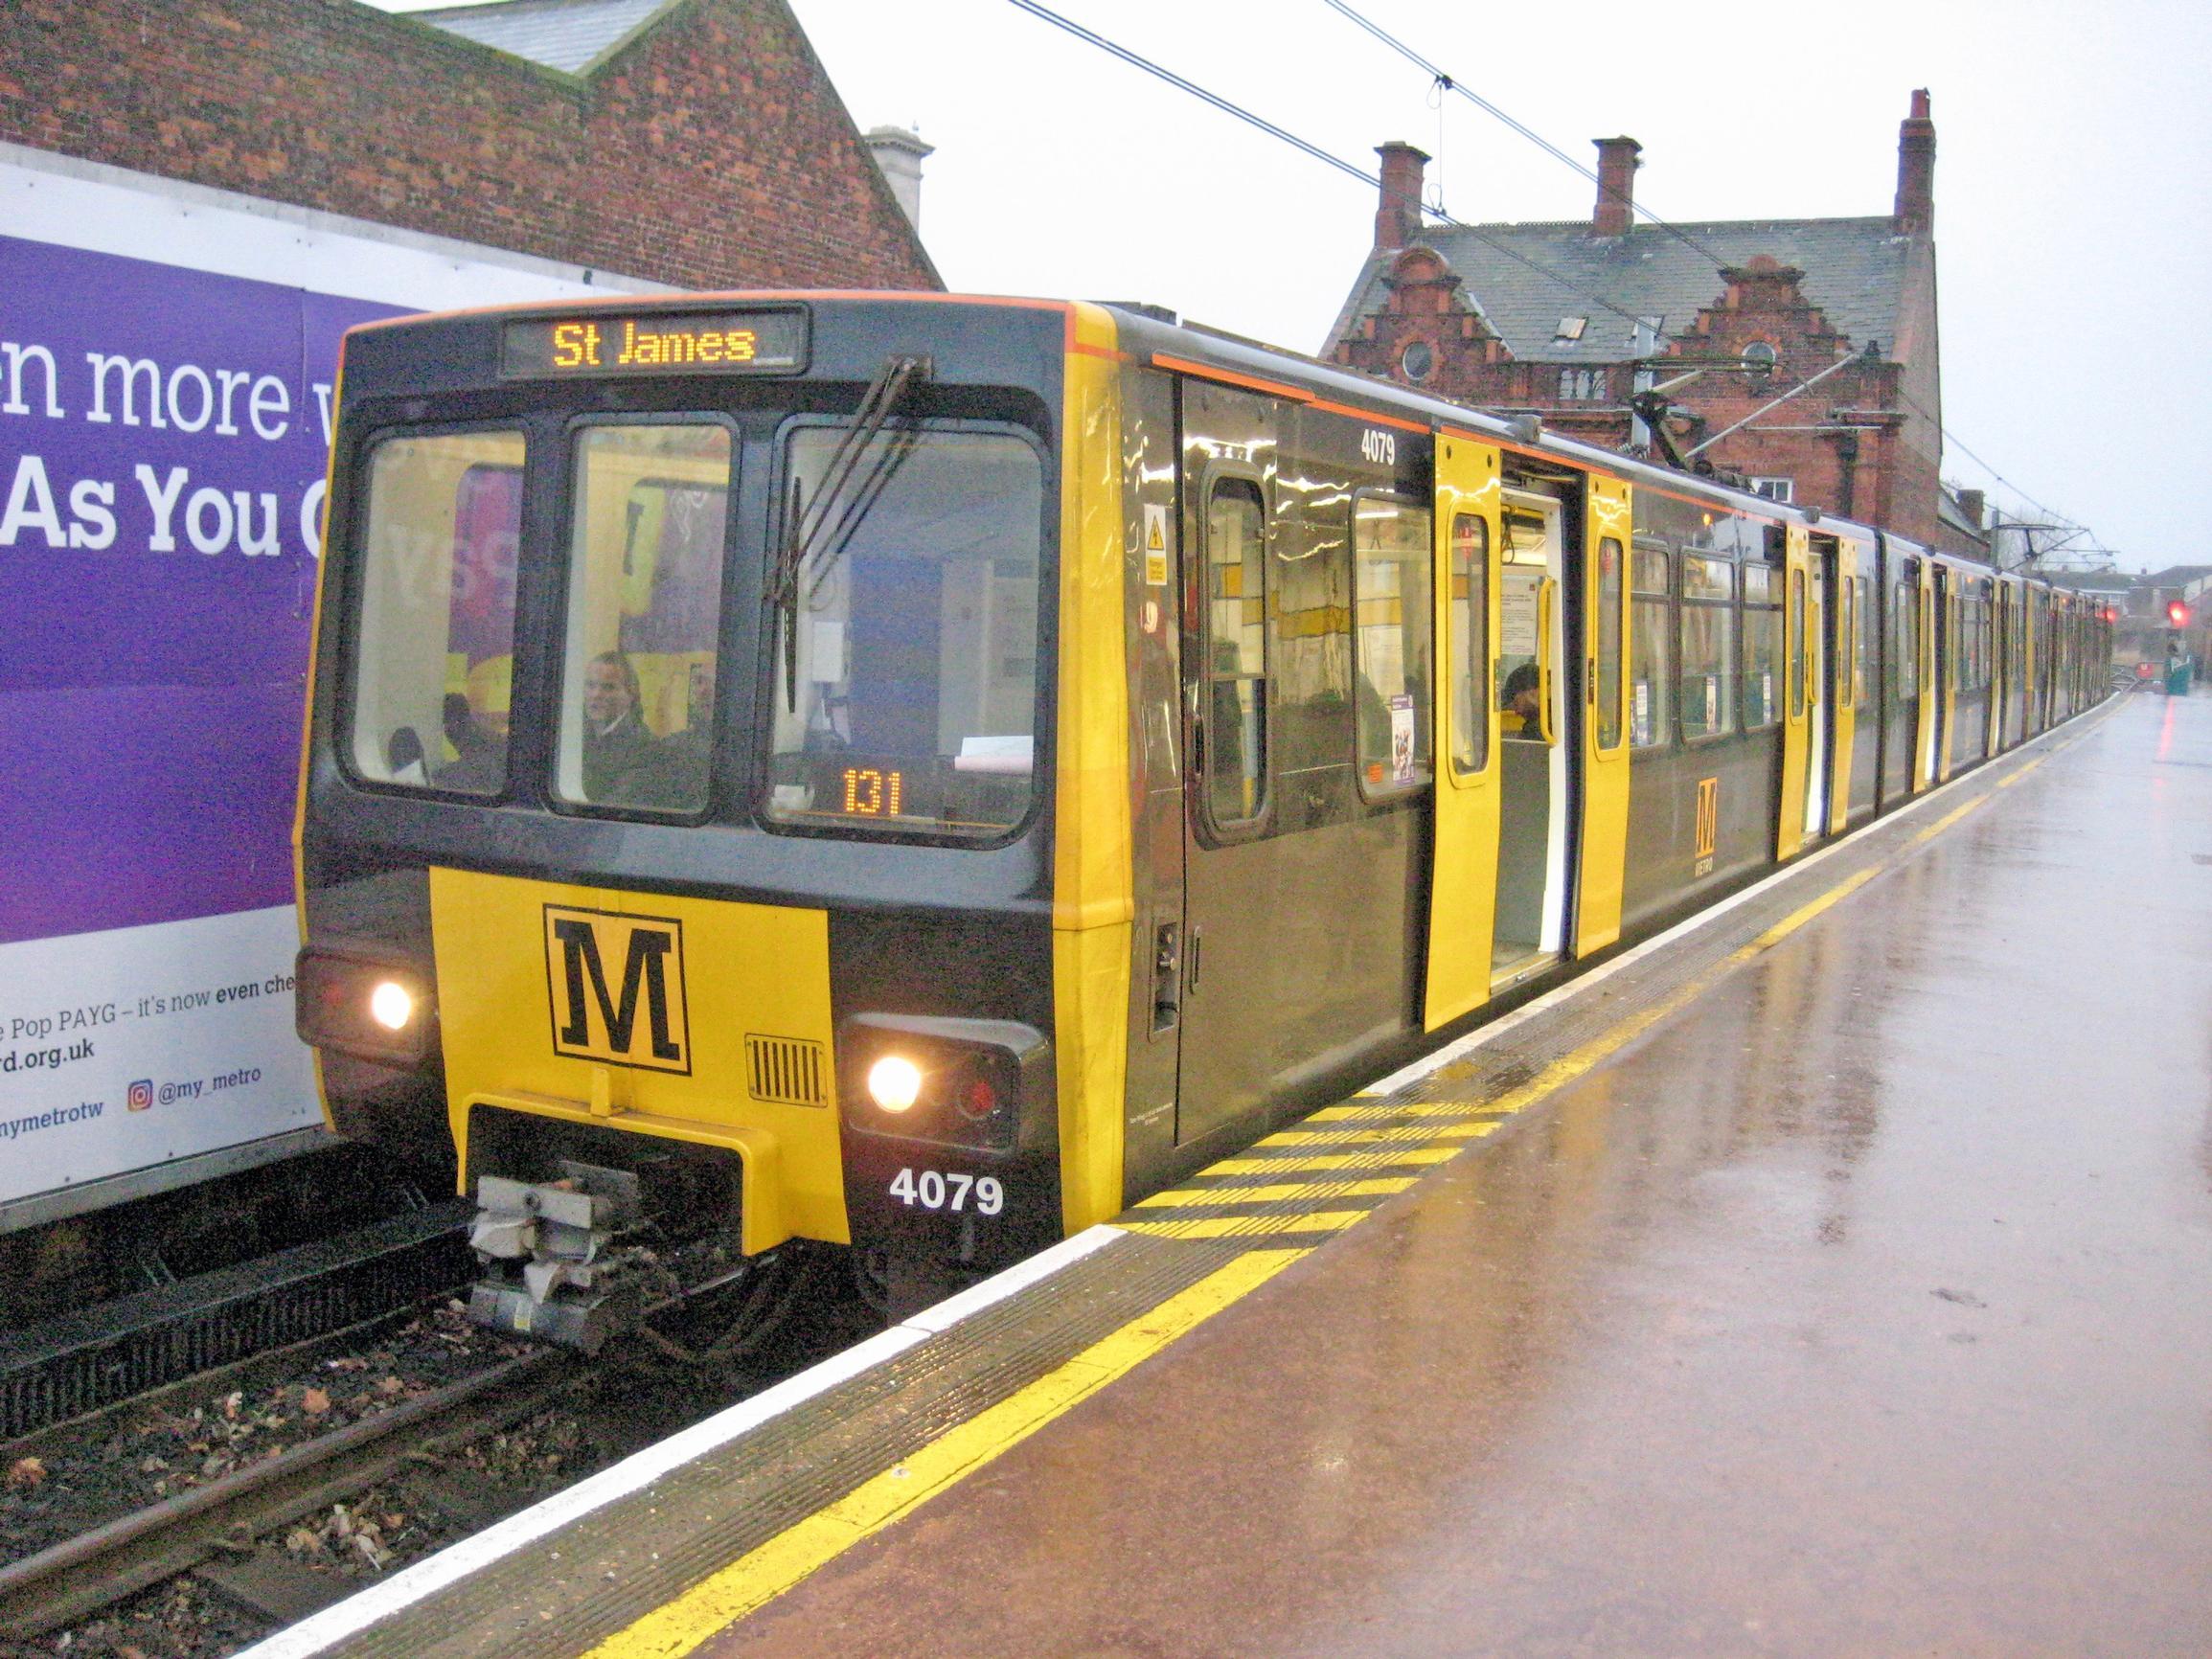 Tyne and Wear Metro: Patronage falling again